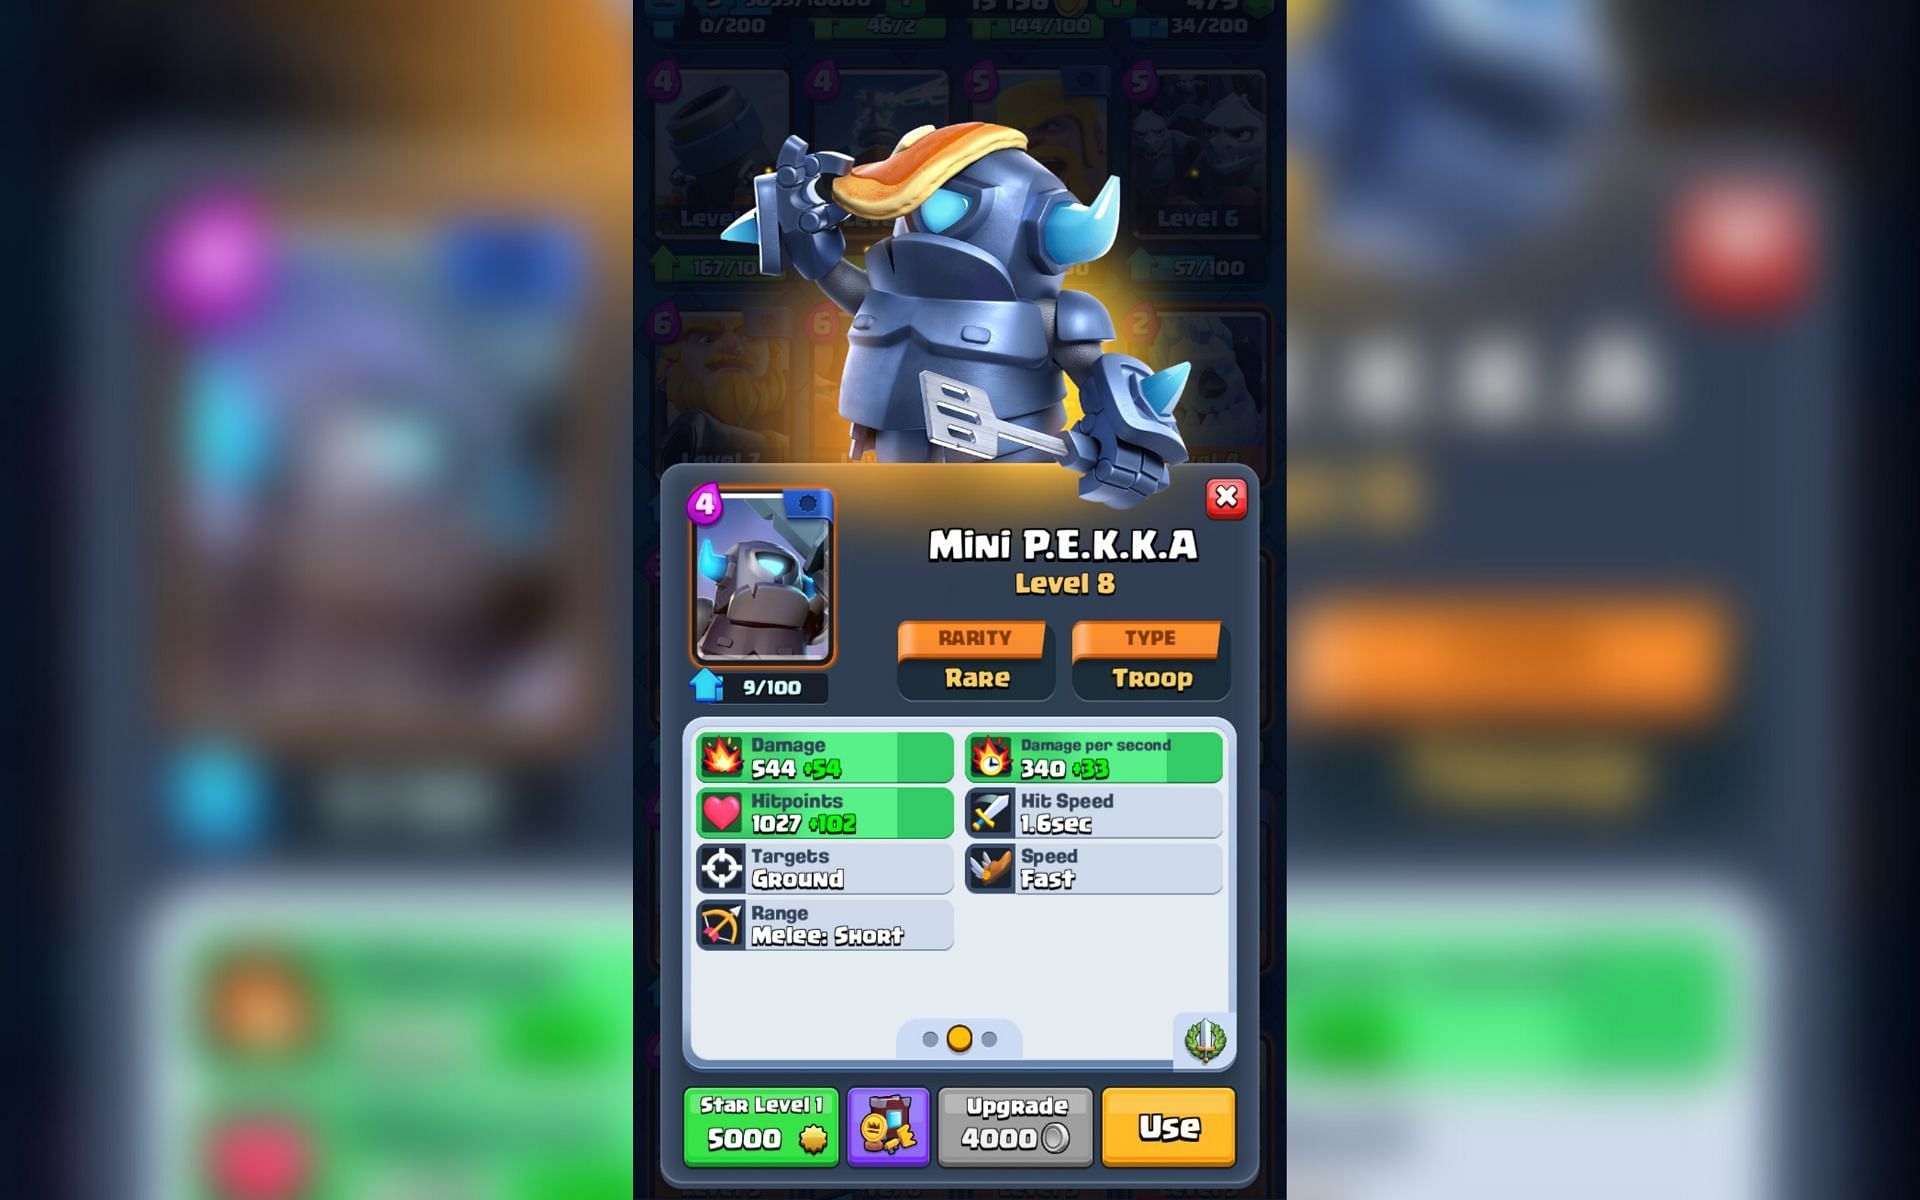 The Mini Pekka card in Clash Royale (Image via Sportskeeda)